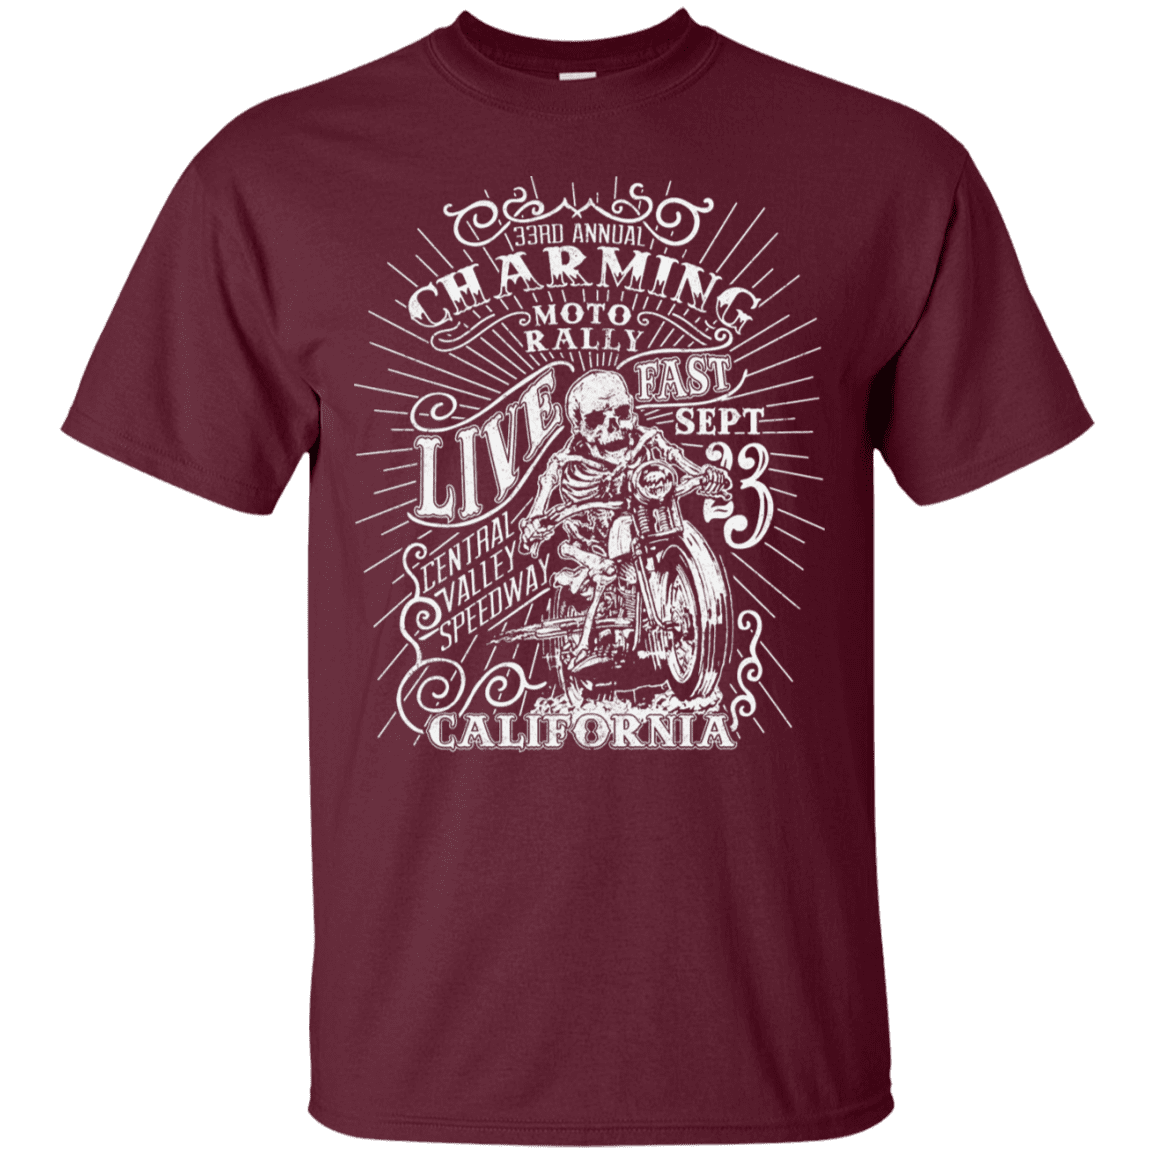 T-Shirts Maroon / S Charming Moto Rally T-Shirt